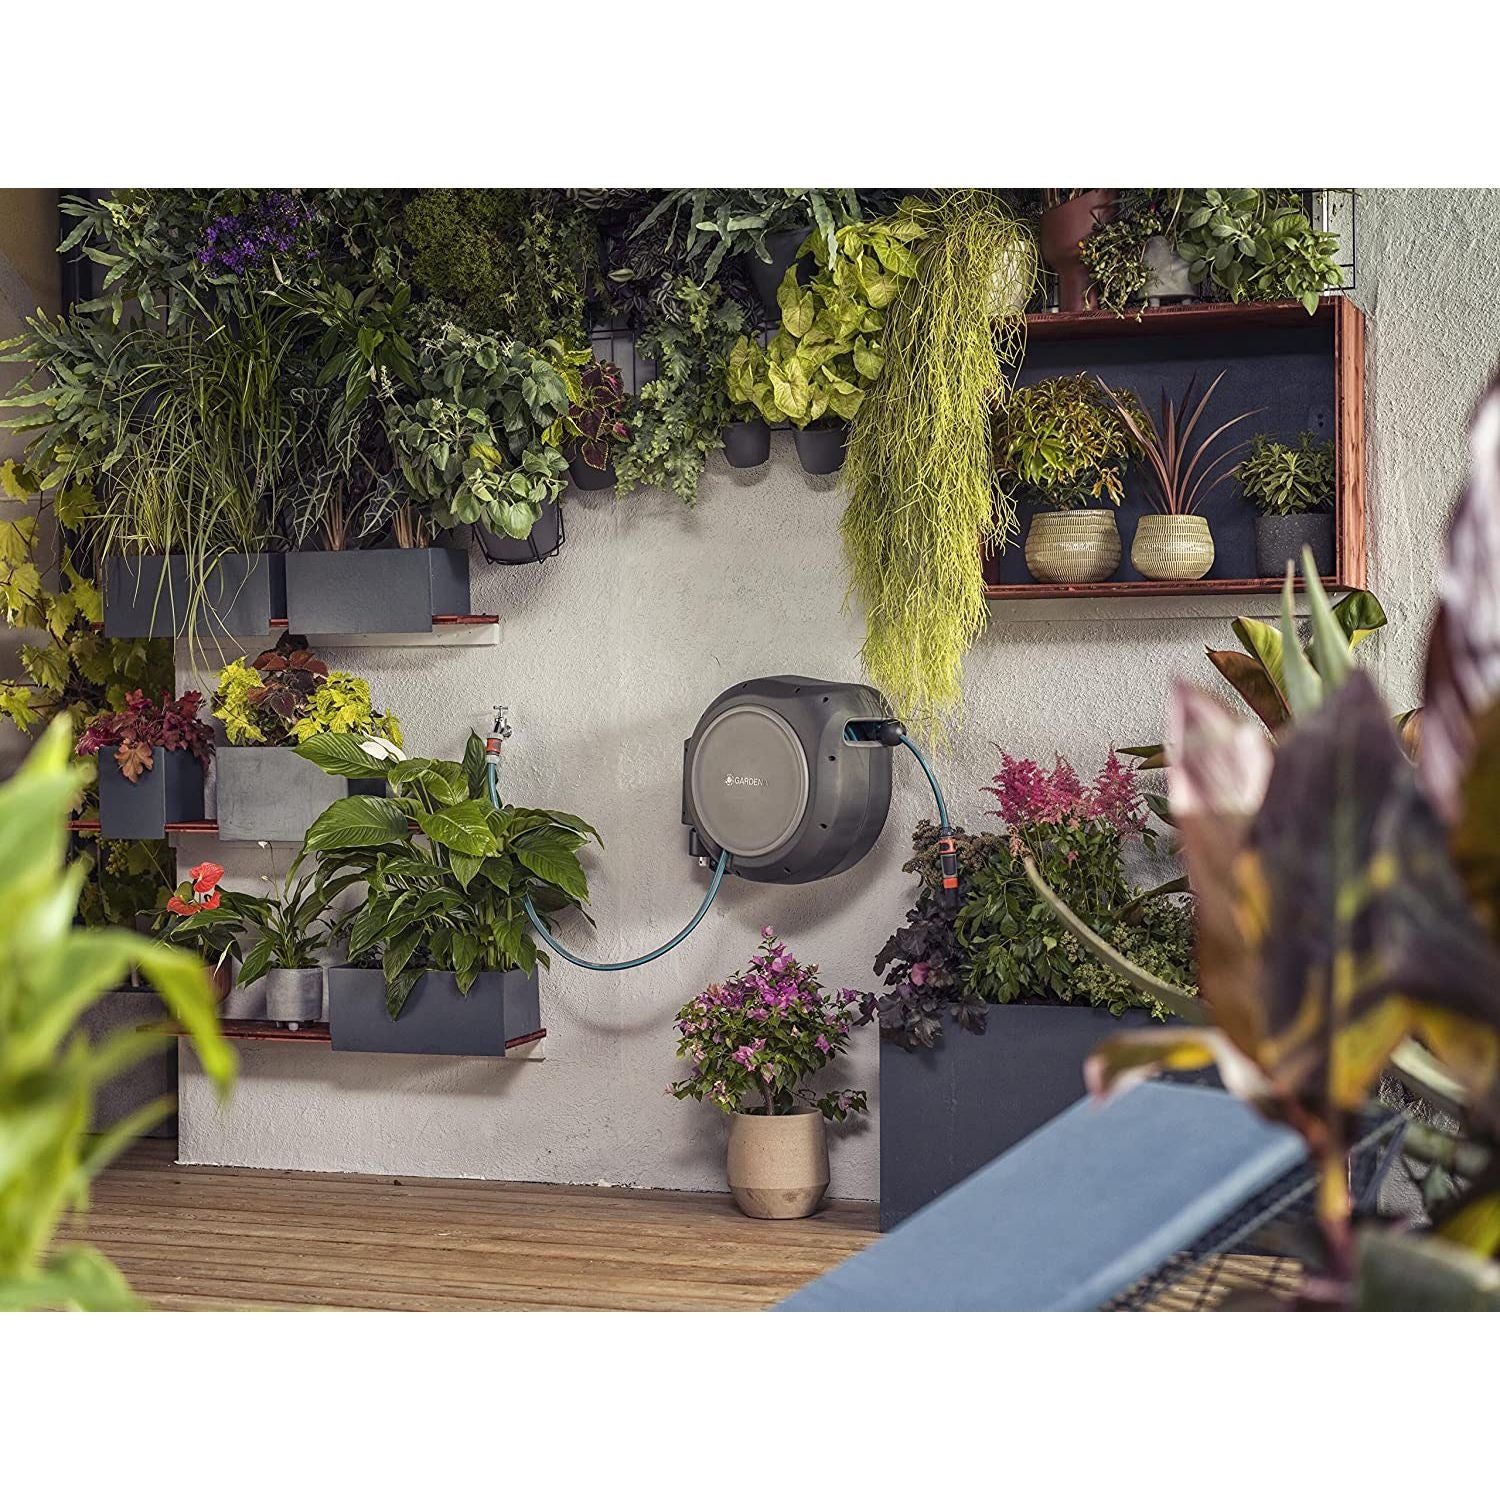 GARDENA Hose Reels - Realize your gardening dreams – Gardena